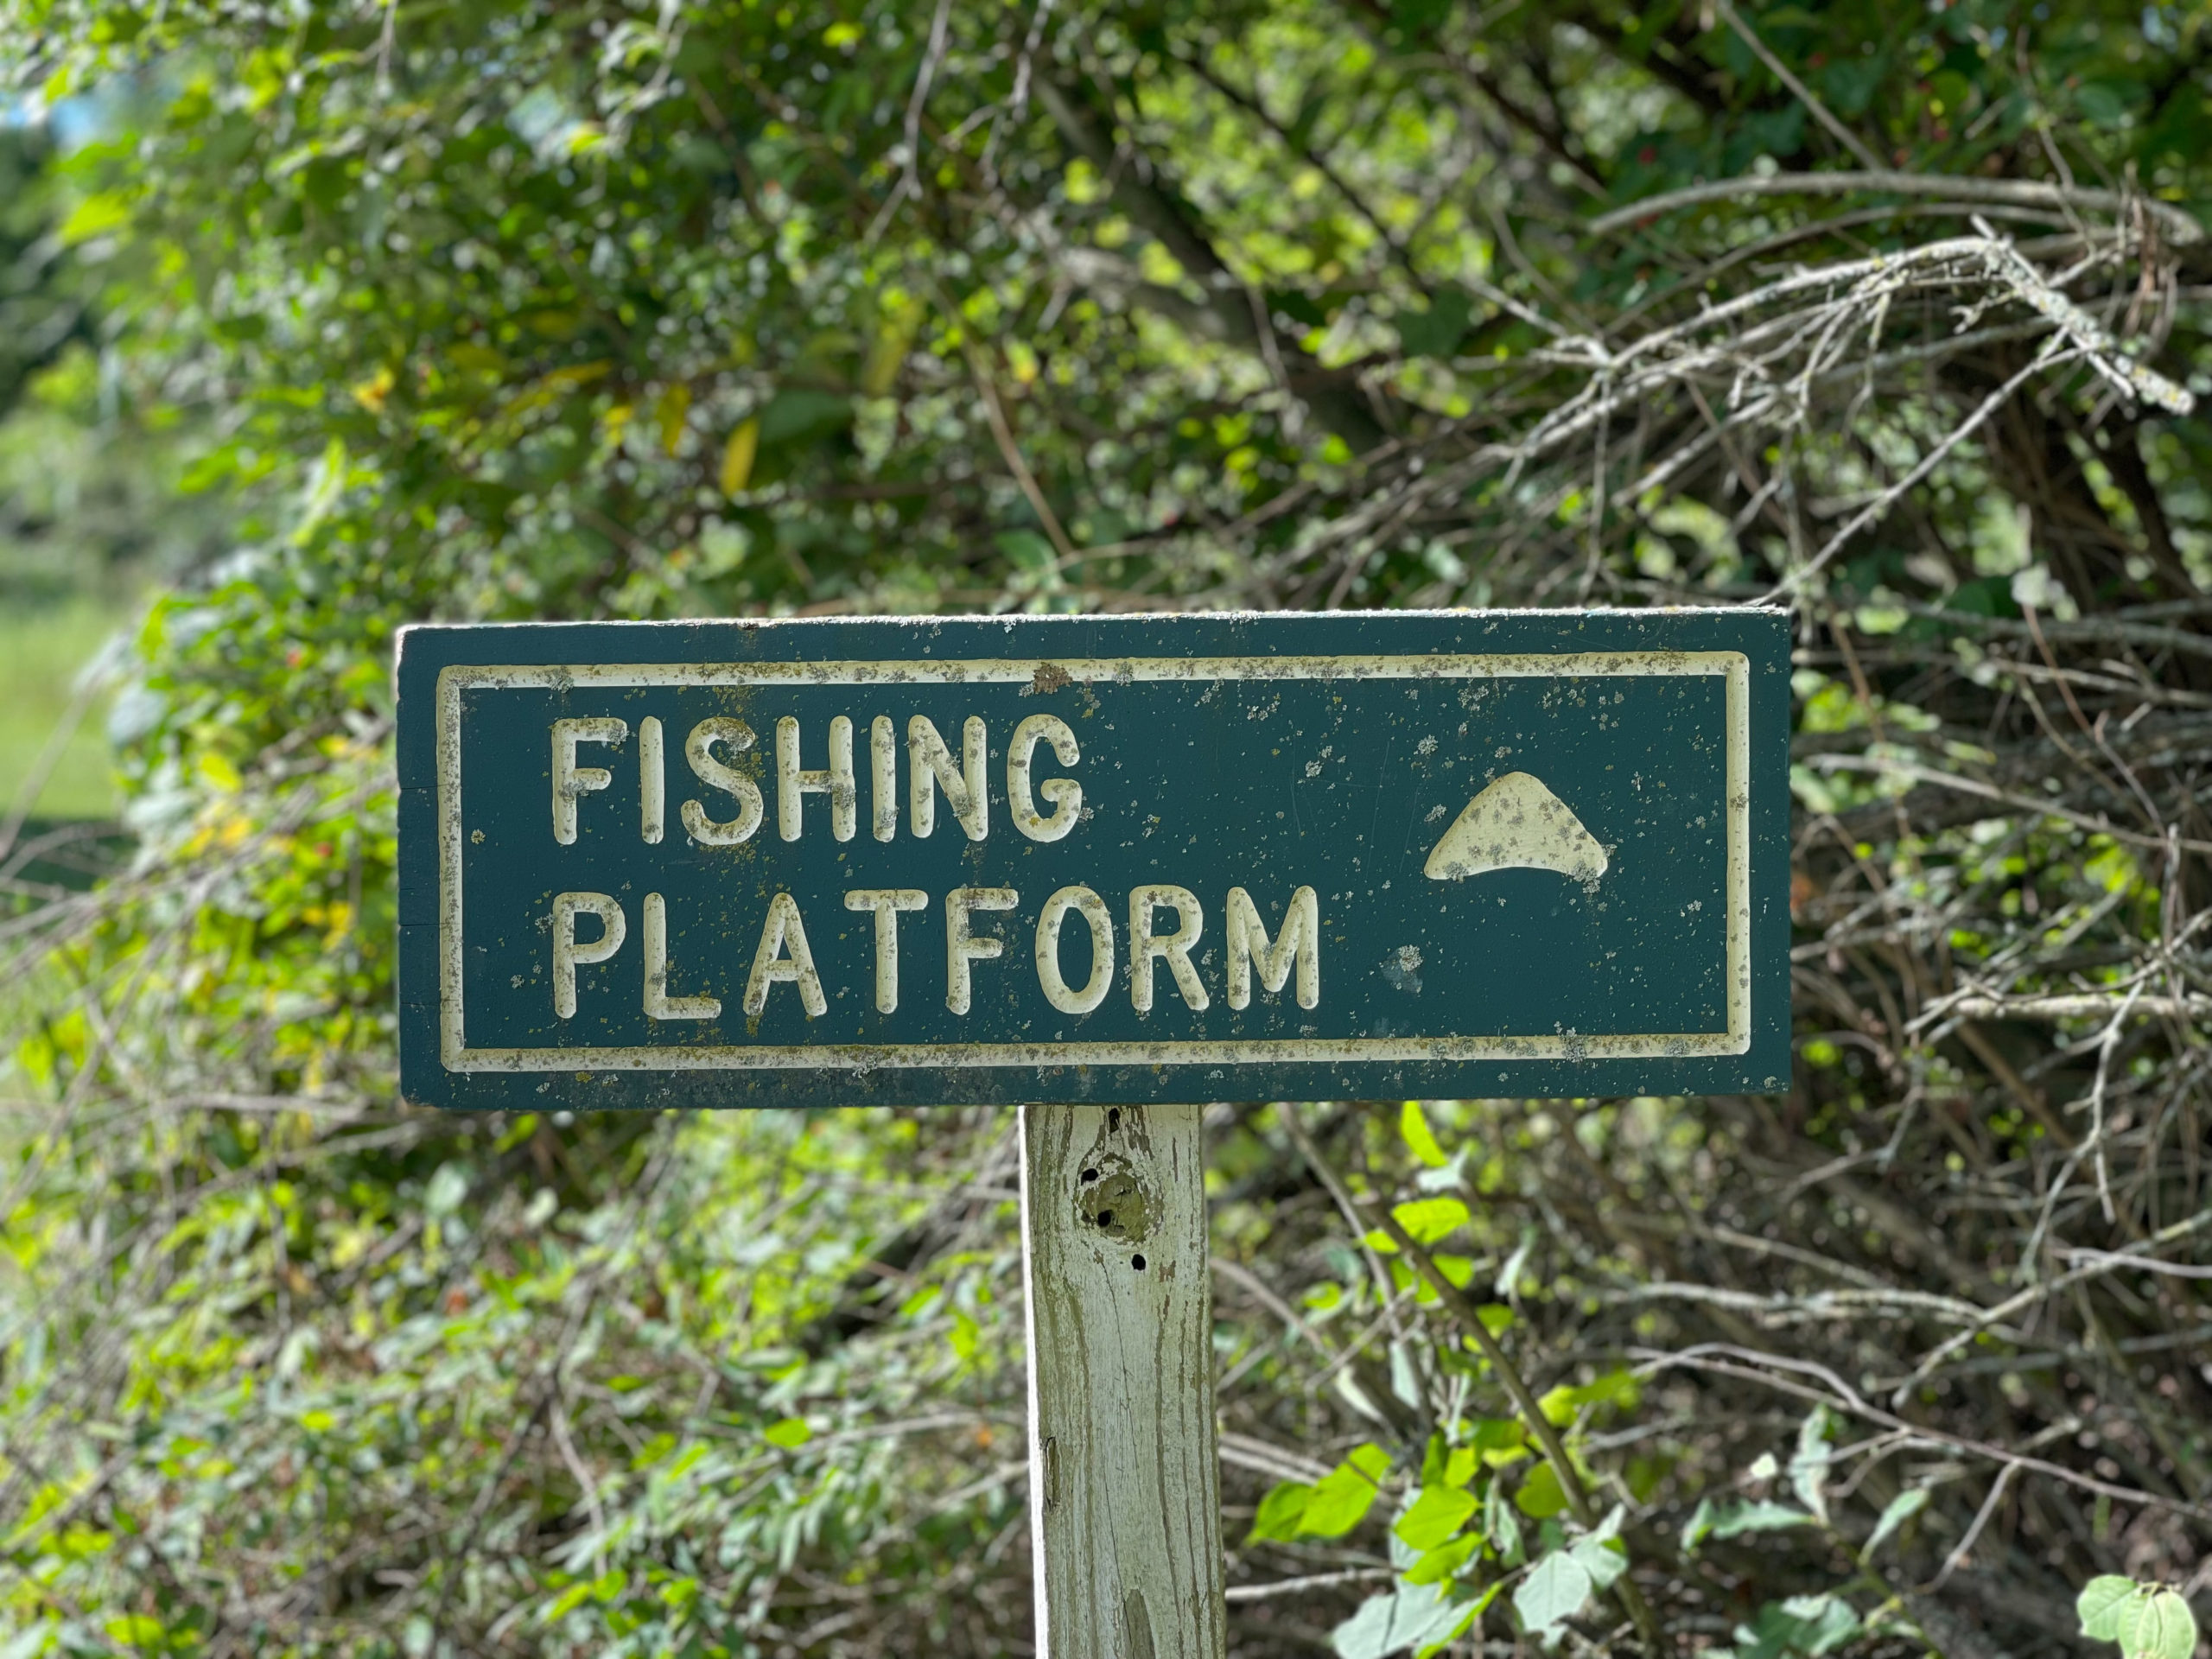 Fishing platform signage.